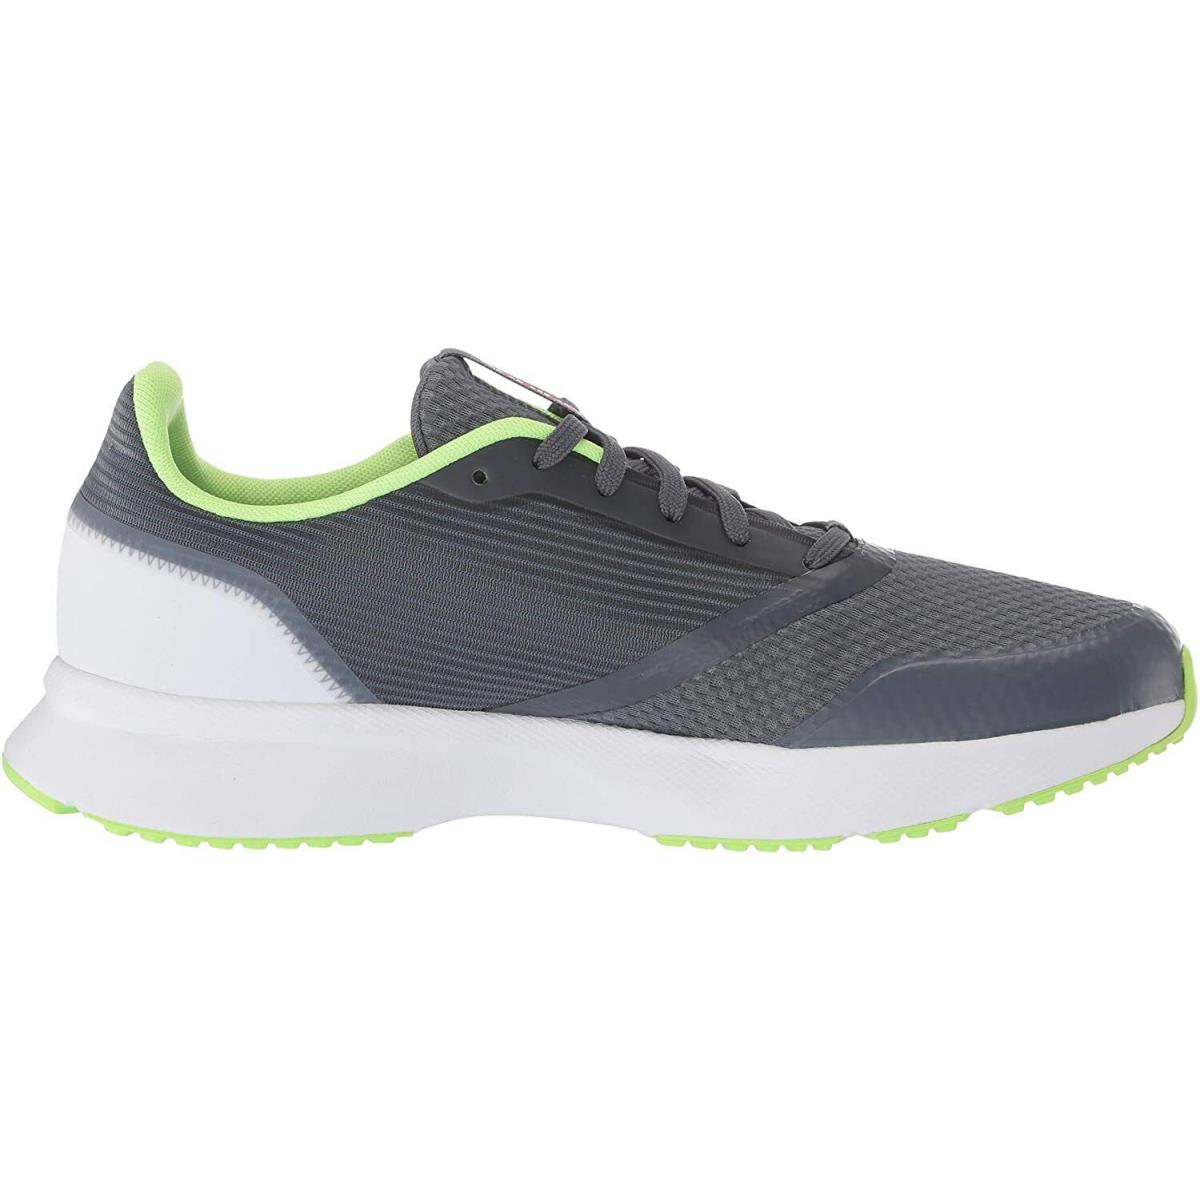 Adidas shoes PureBoost - Onix Grey/Green 0